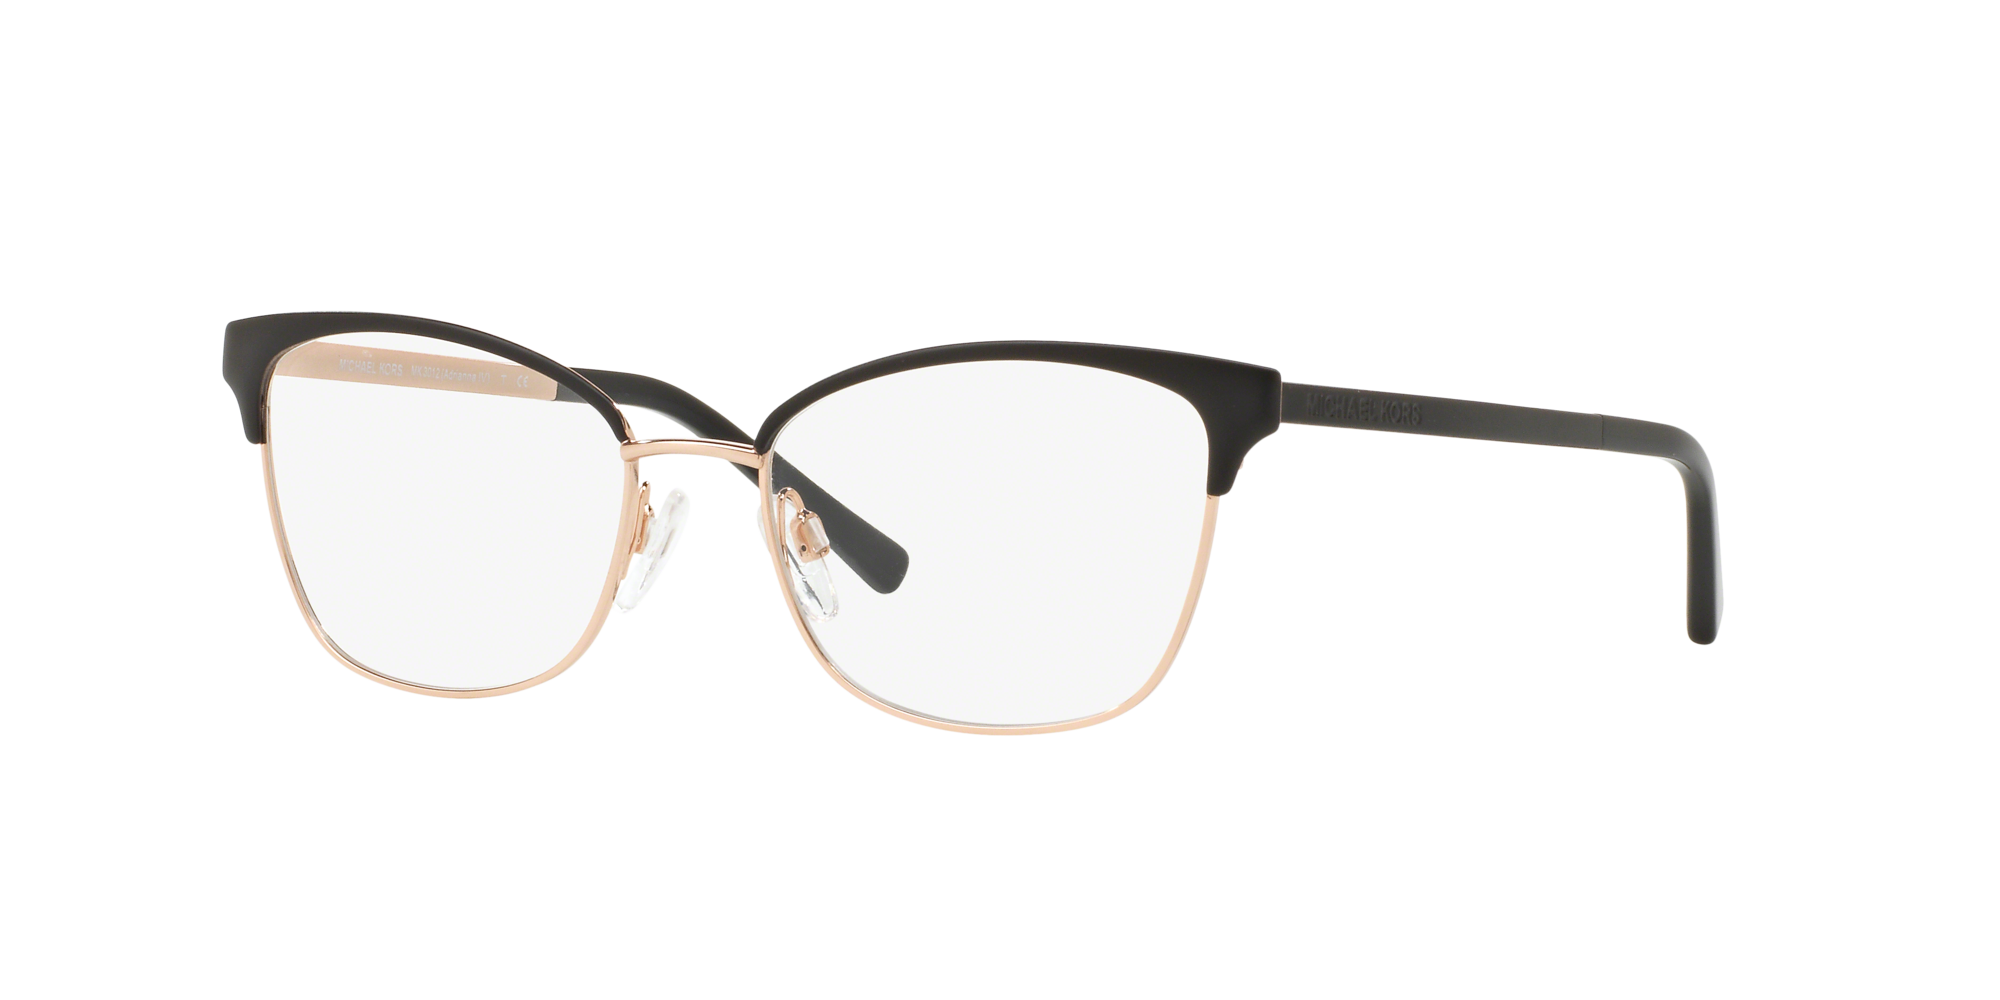 Cheap Michael Kors Adrianna 1 1010 Sunglasses  Discounted Sunglasses